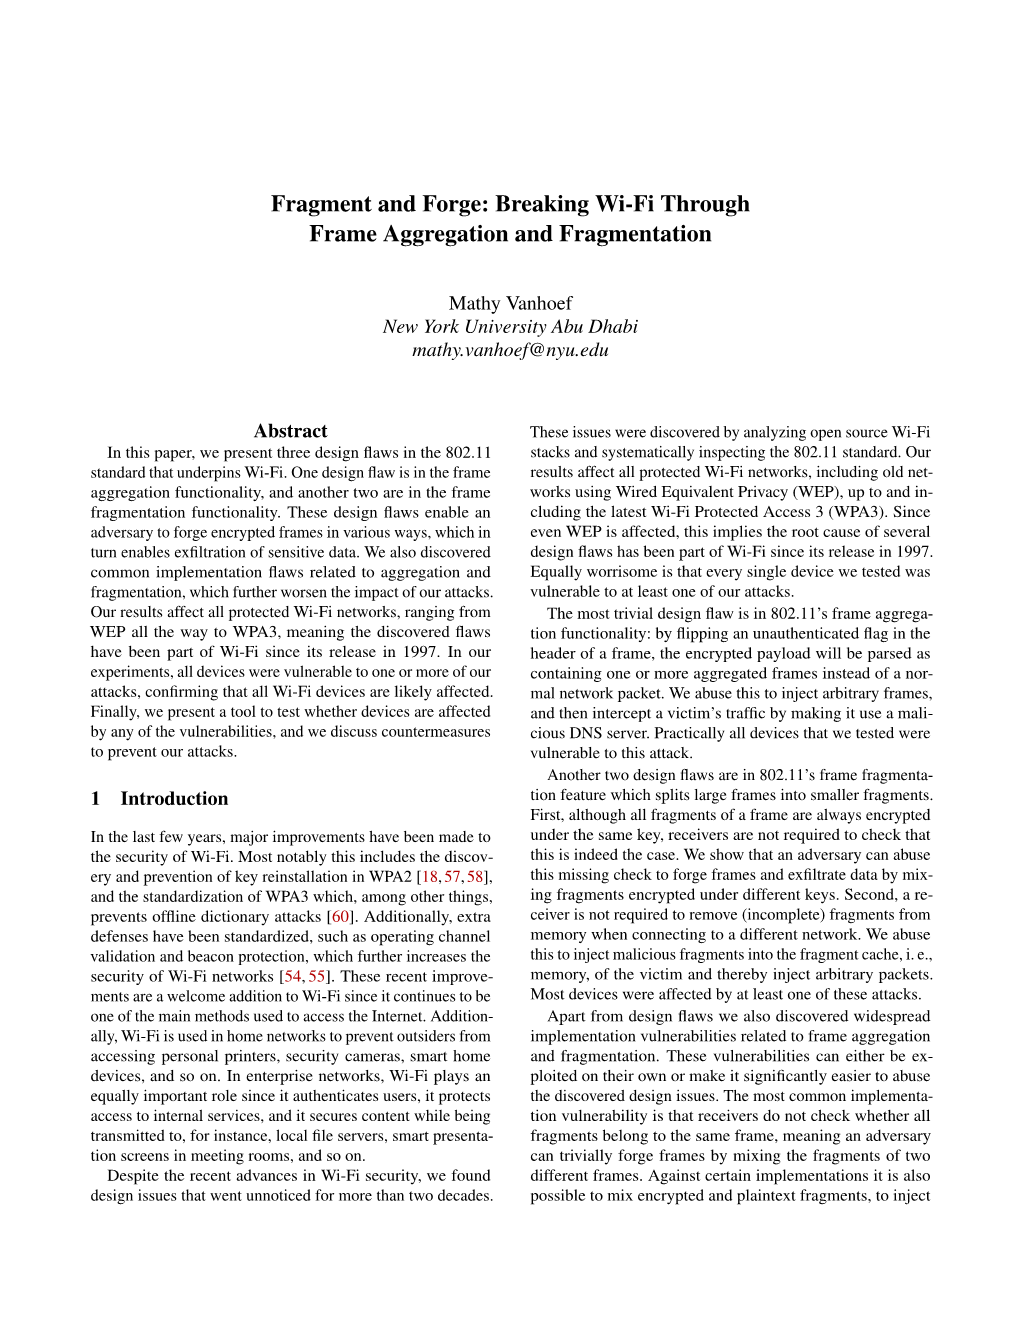 Breaking Wi-Fi Through Frame Aggregation and Fragmentation